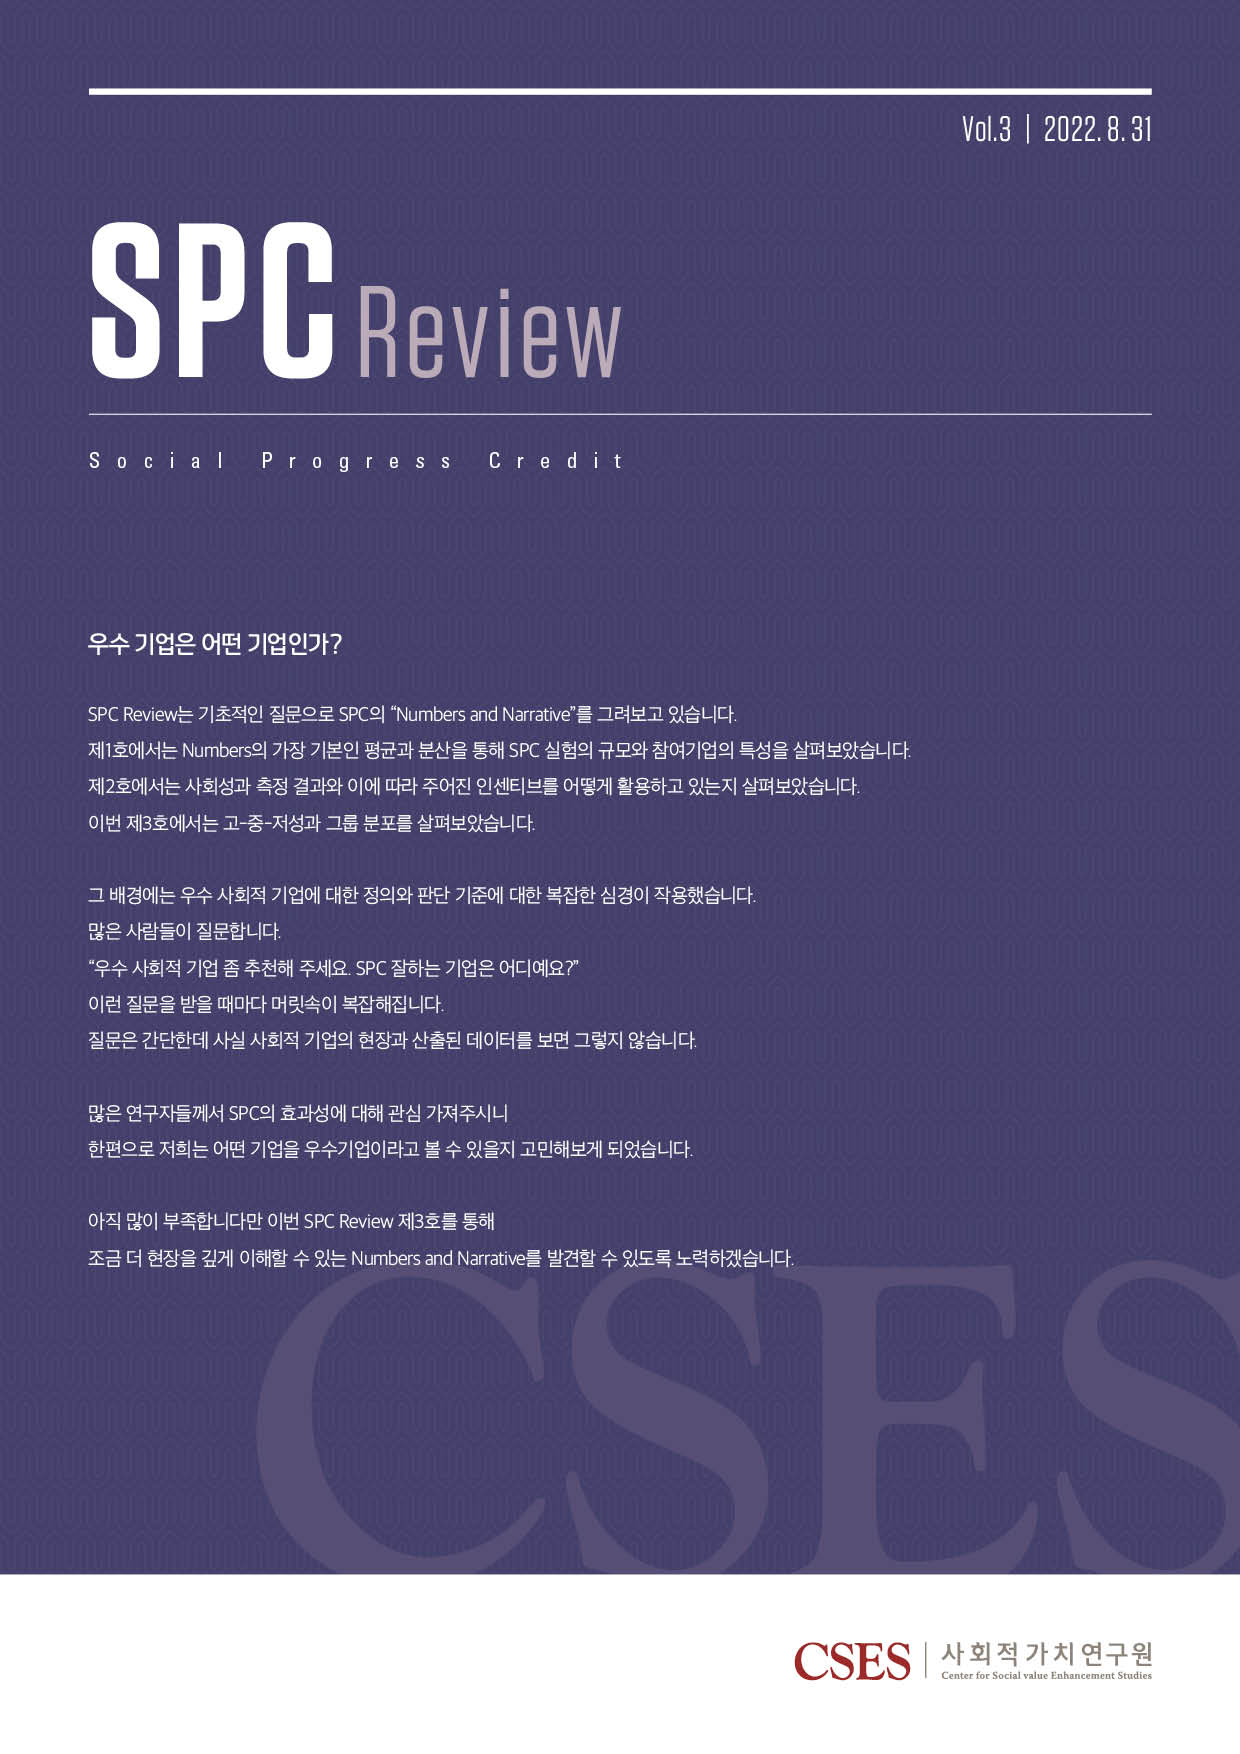 SPC Review Vol3에 관련된 내용으로 자세한 내용은 첨부된 PDF 파일을 확인해주시기 바랍니다.